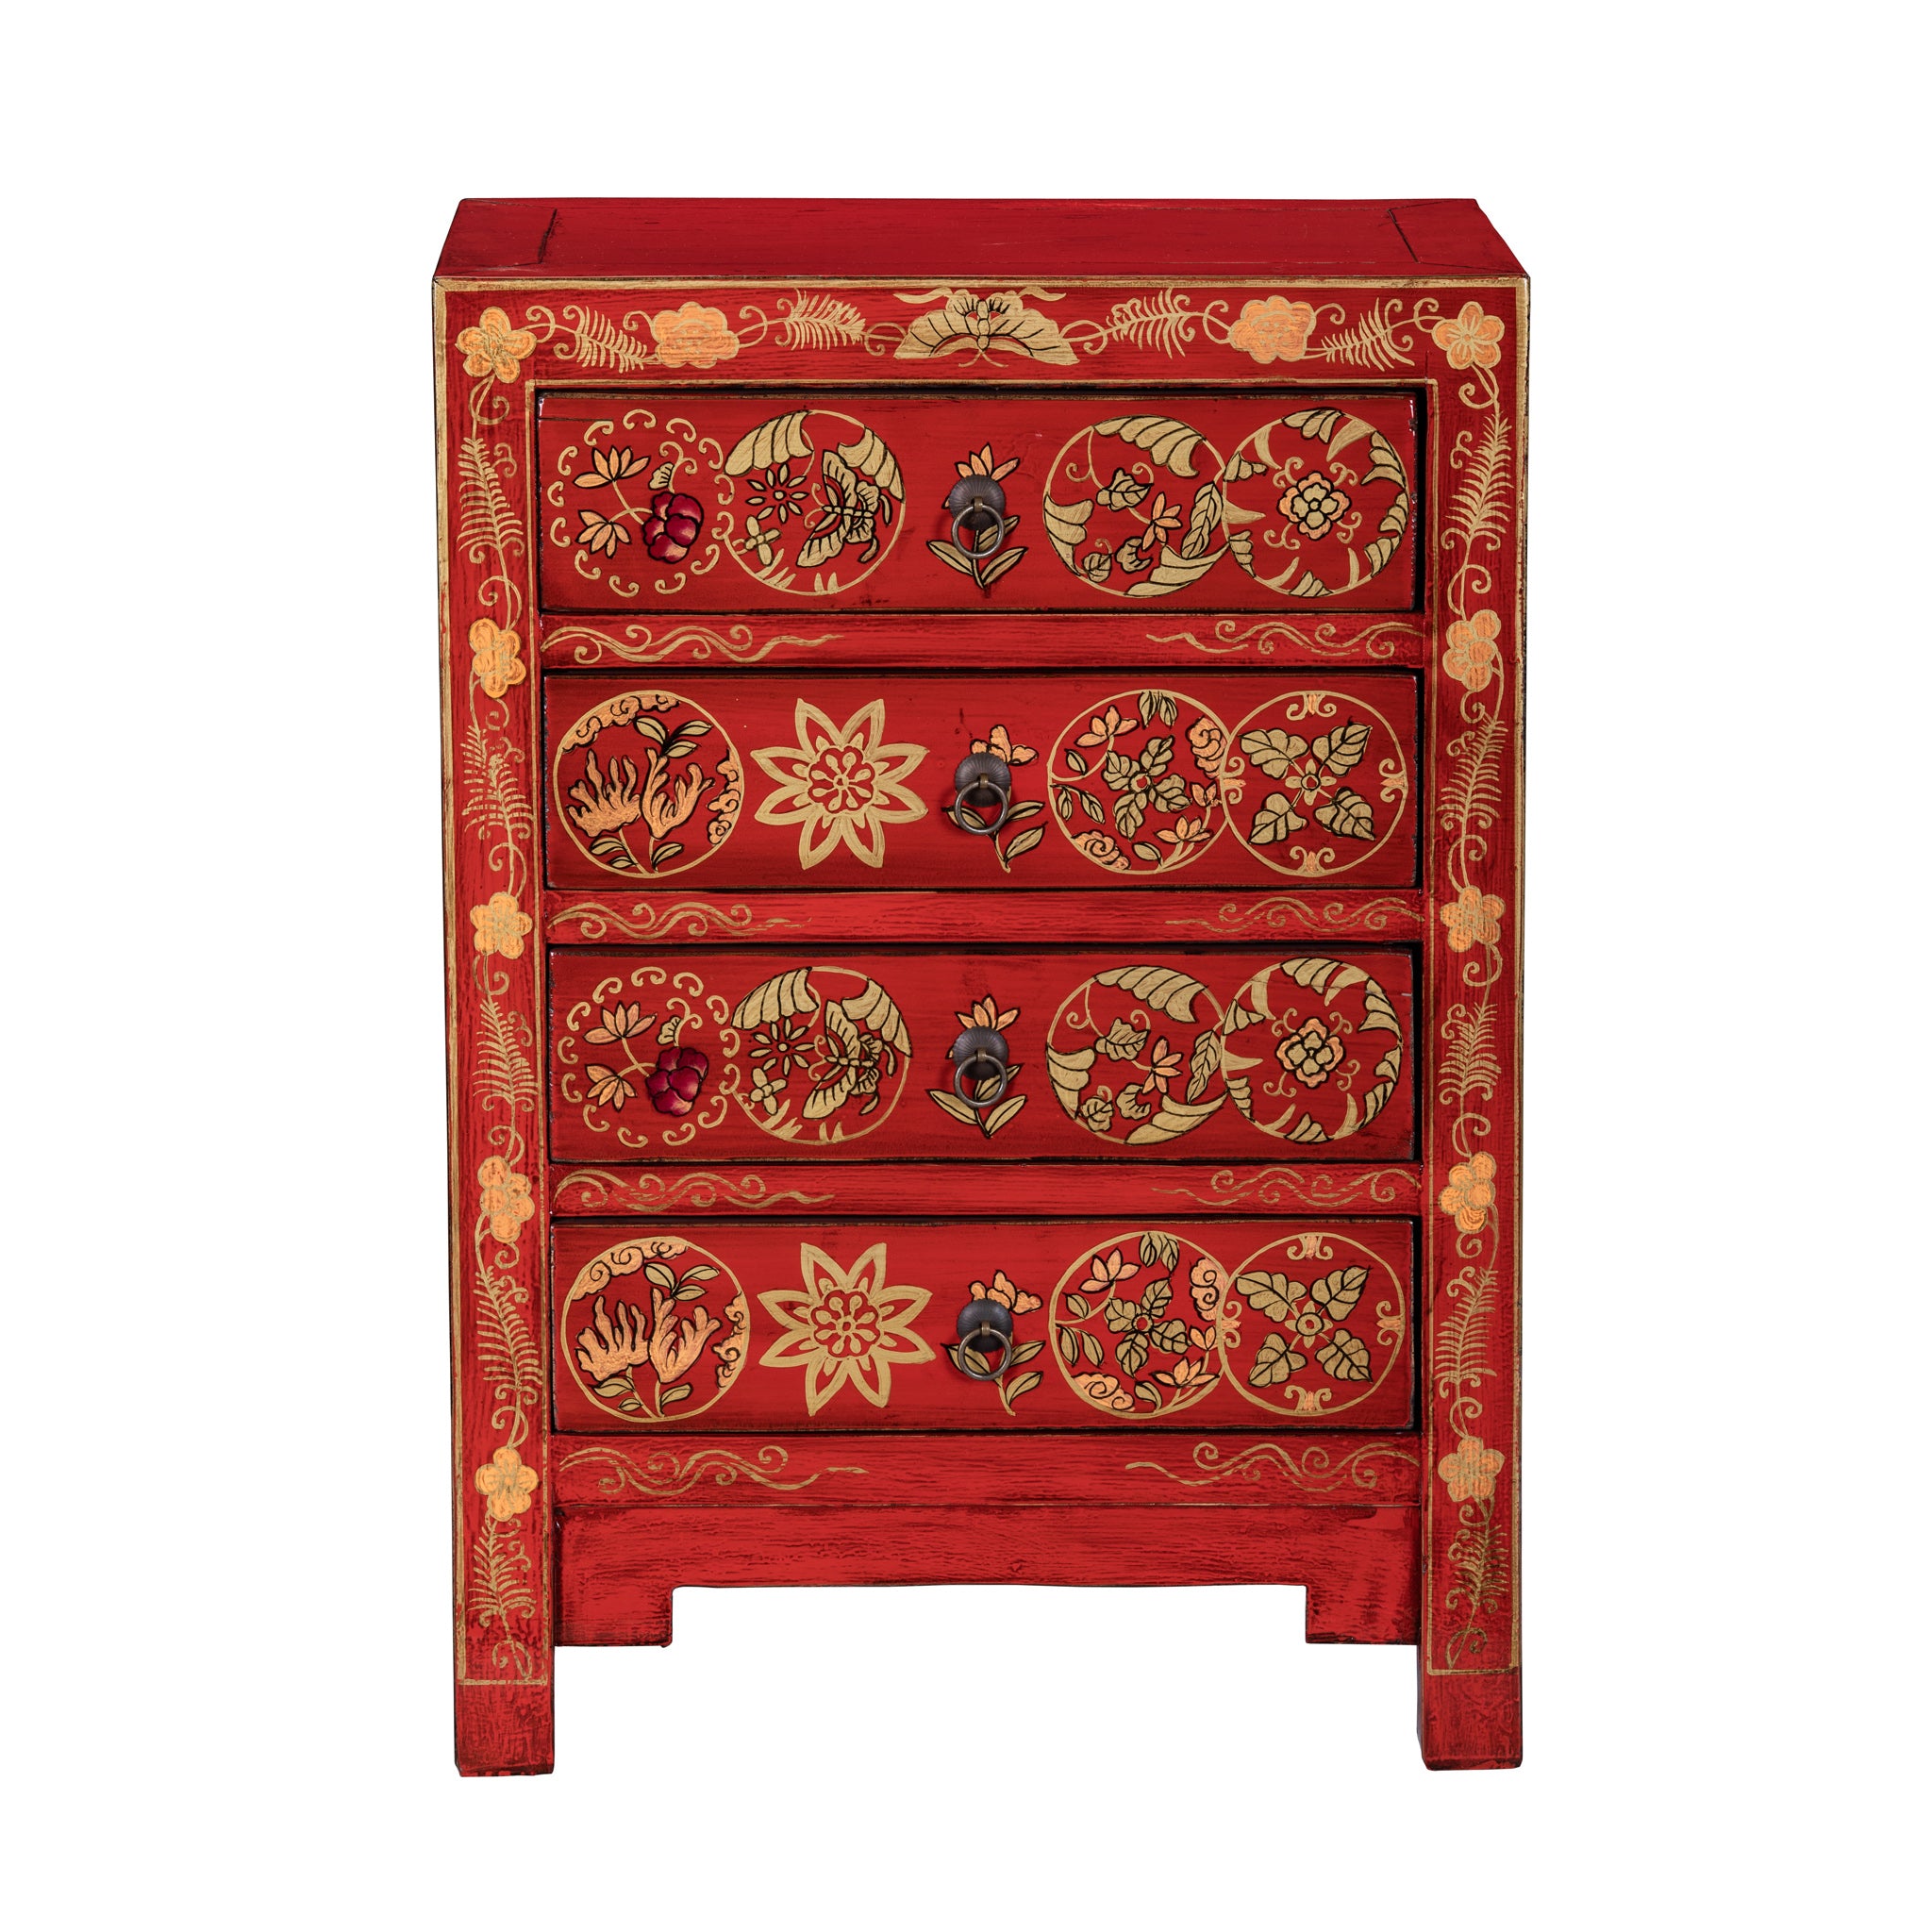 [Unique Chinese Wooden Artisan Furniture Online]-ReOrient